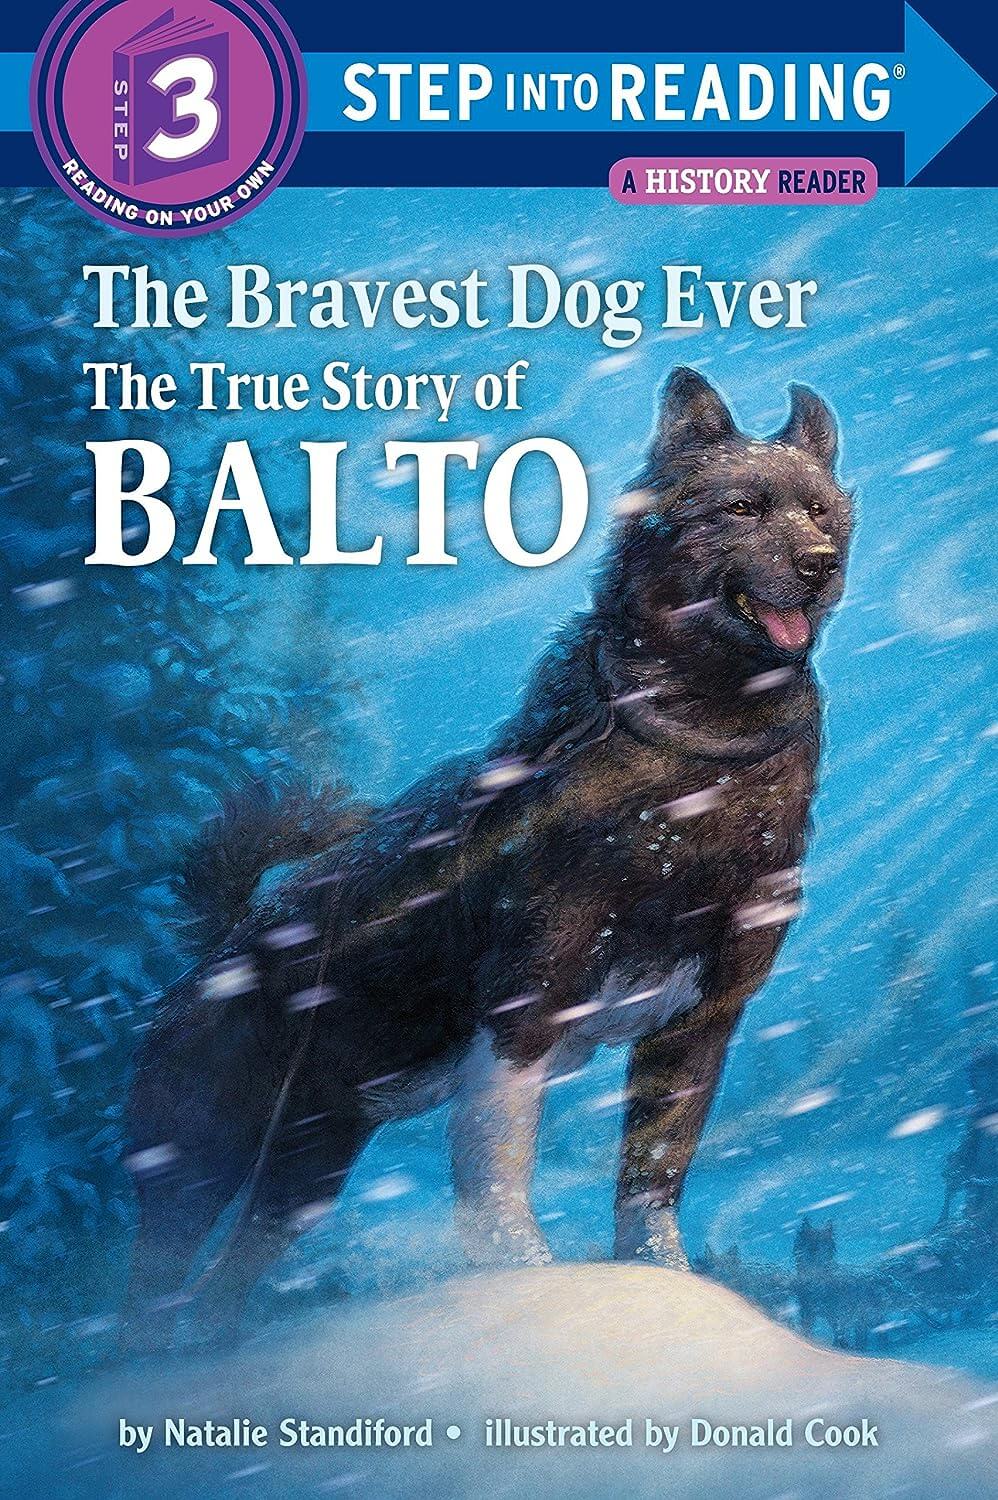 Book: The Bravest Dog Ever: The True Story of Balto